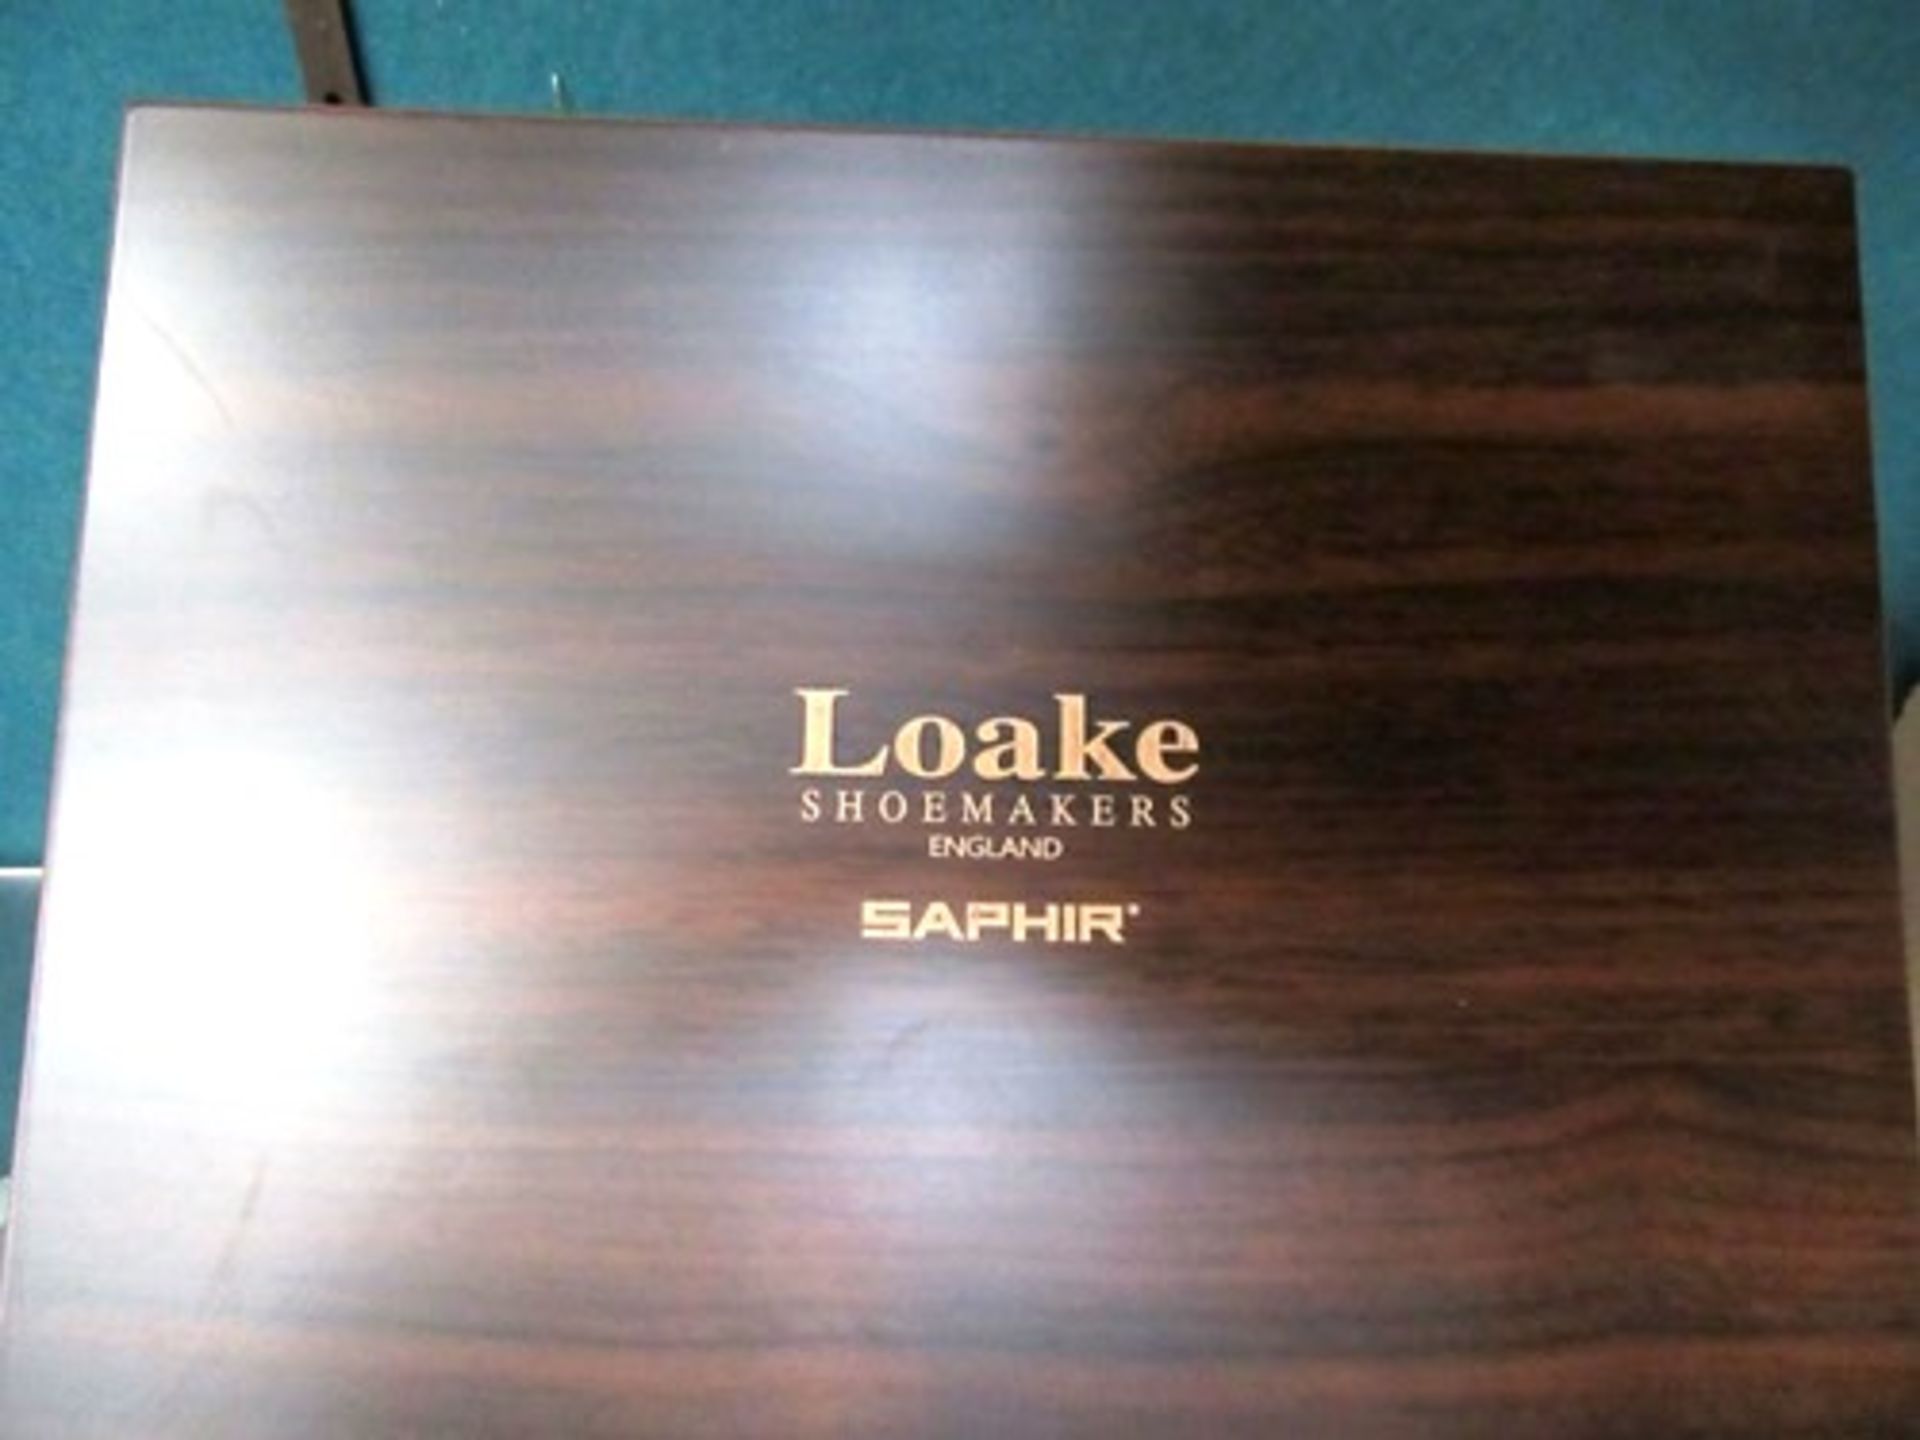 1 x Loake shoemakers valet box walnut, containing shoe polish in various colours, brushes,